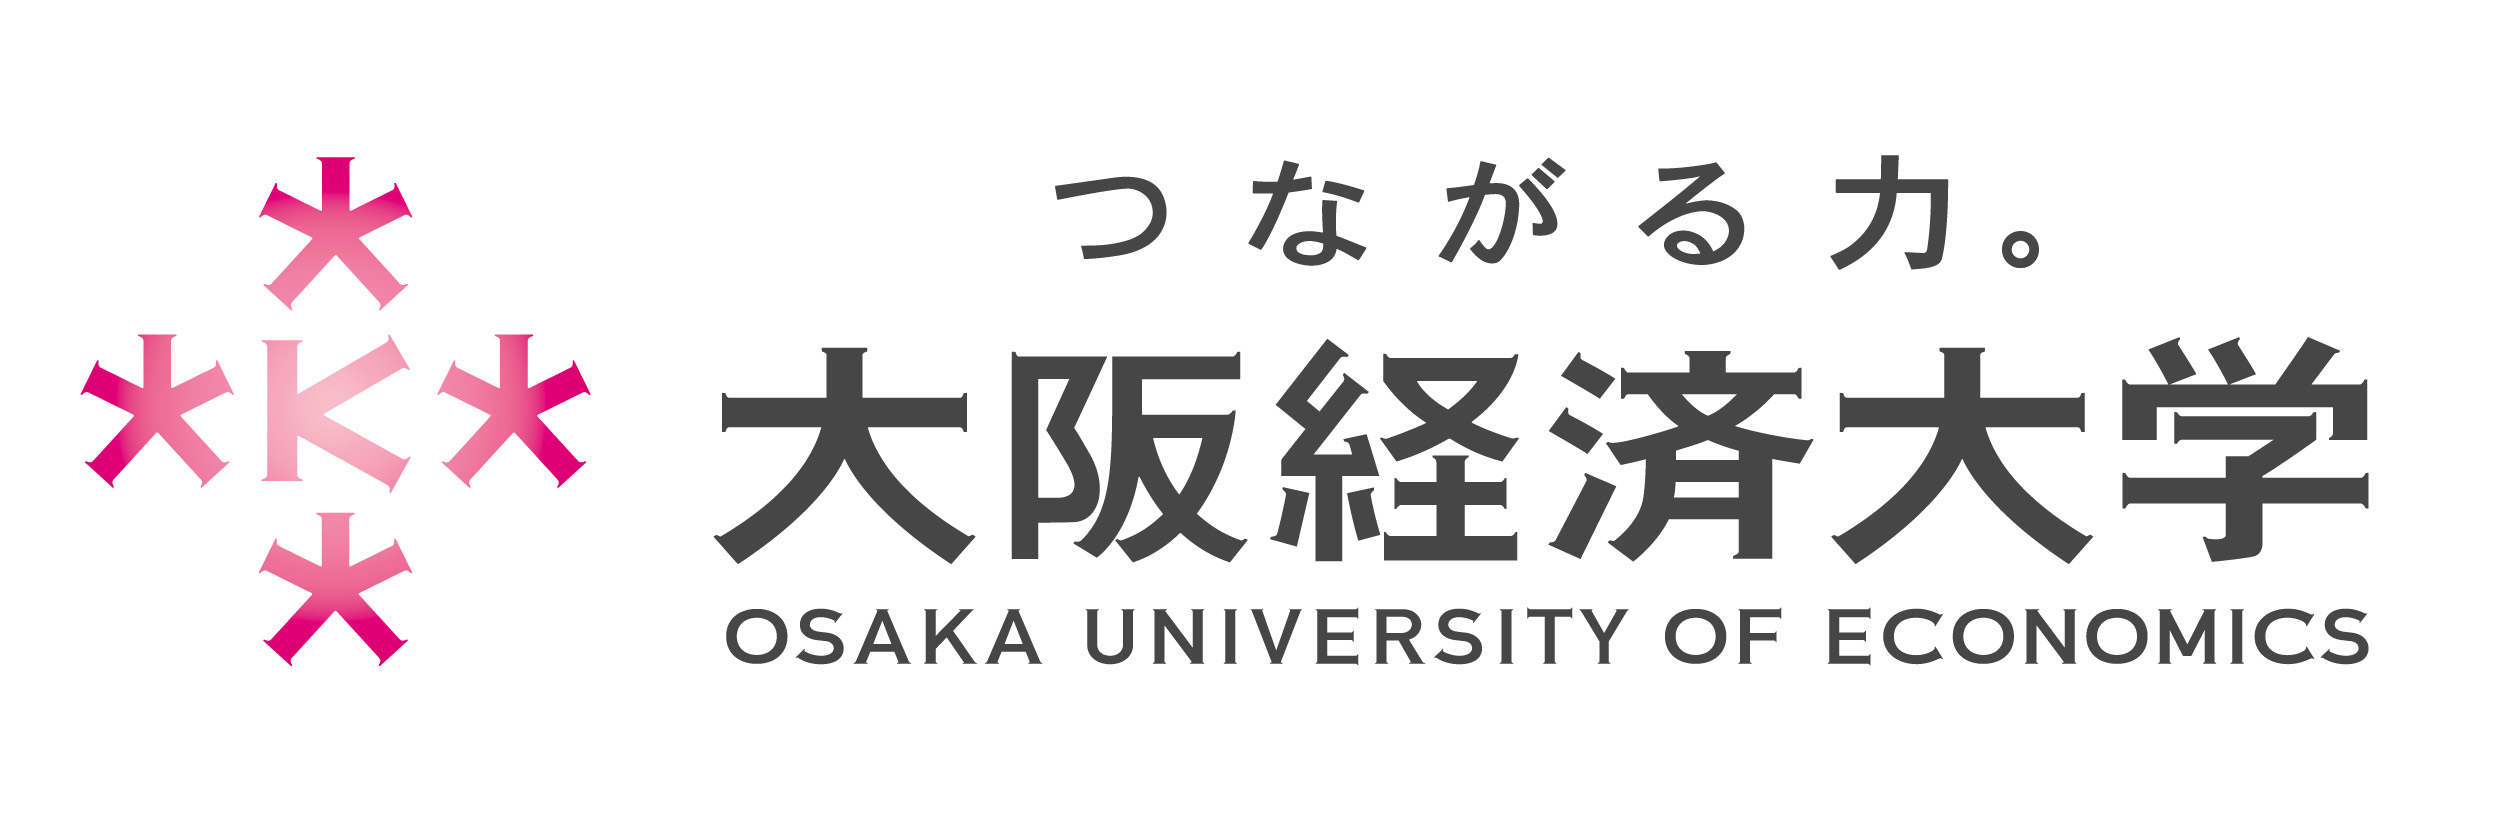 Osaka University of Economics,